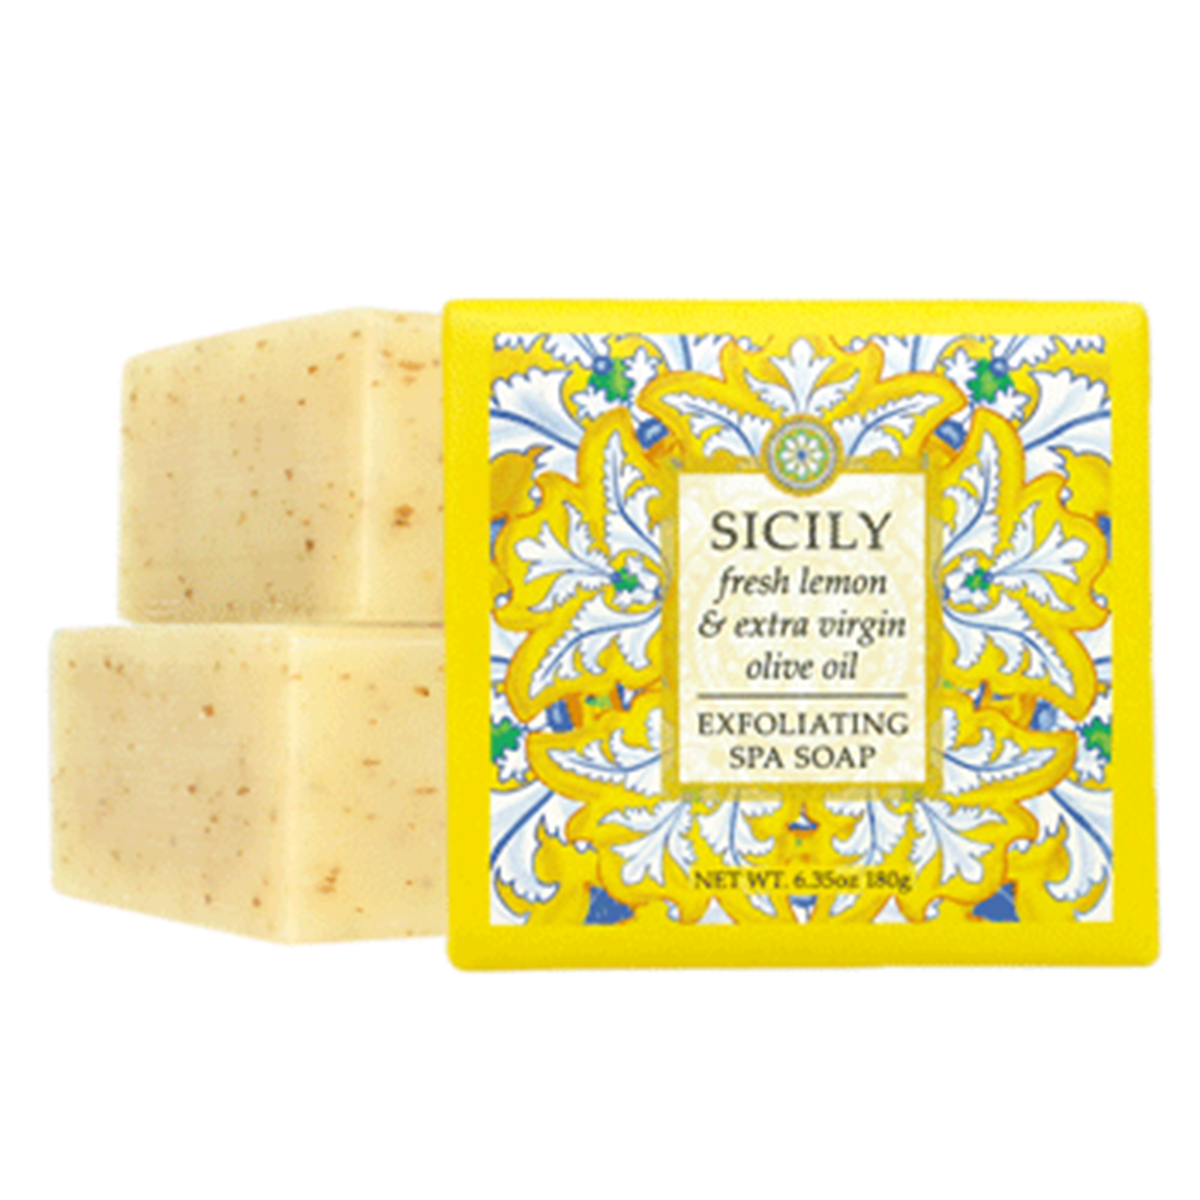 Sicily Shea Butter Soap